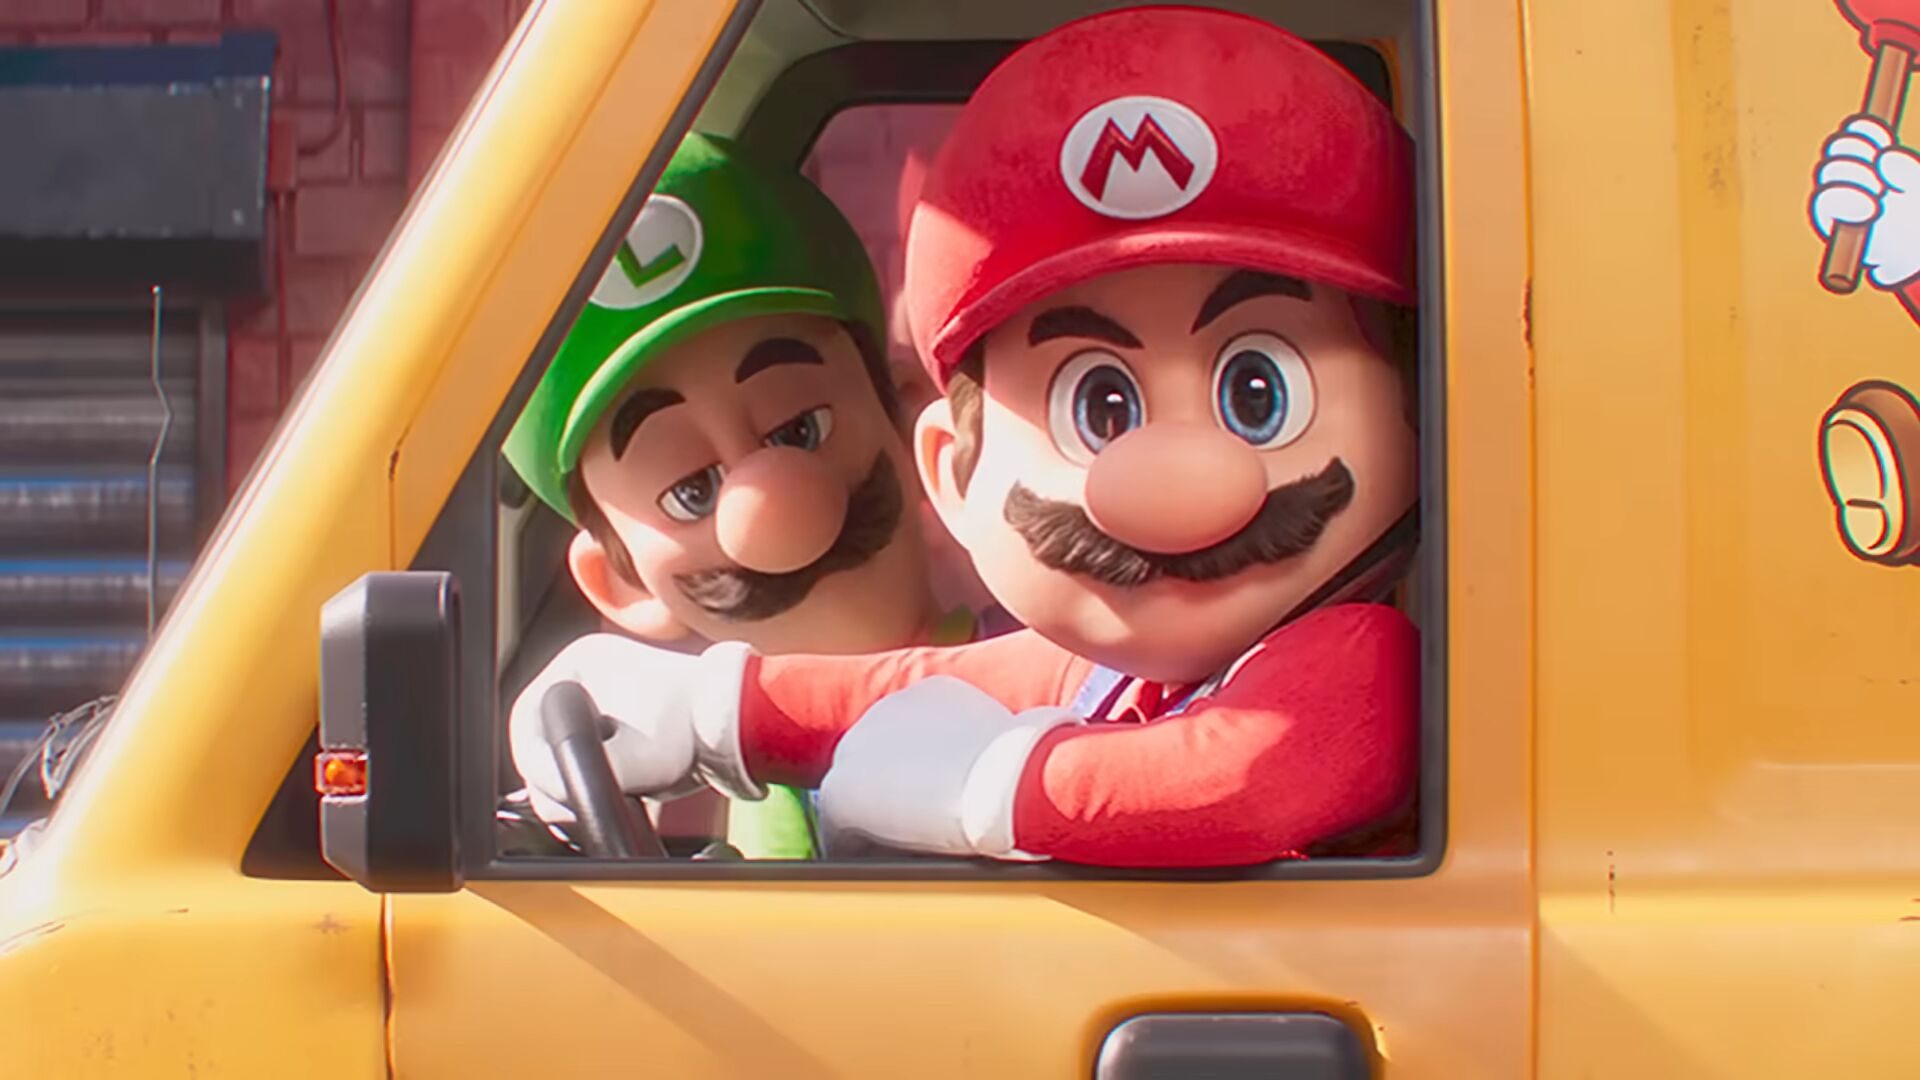 Super-Mario-Bros-Sanitär-Werbung-0-4-Screenshot-2891793-9259072